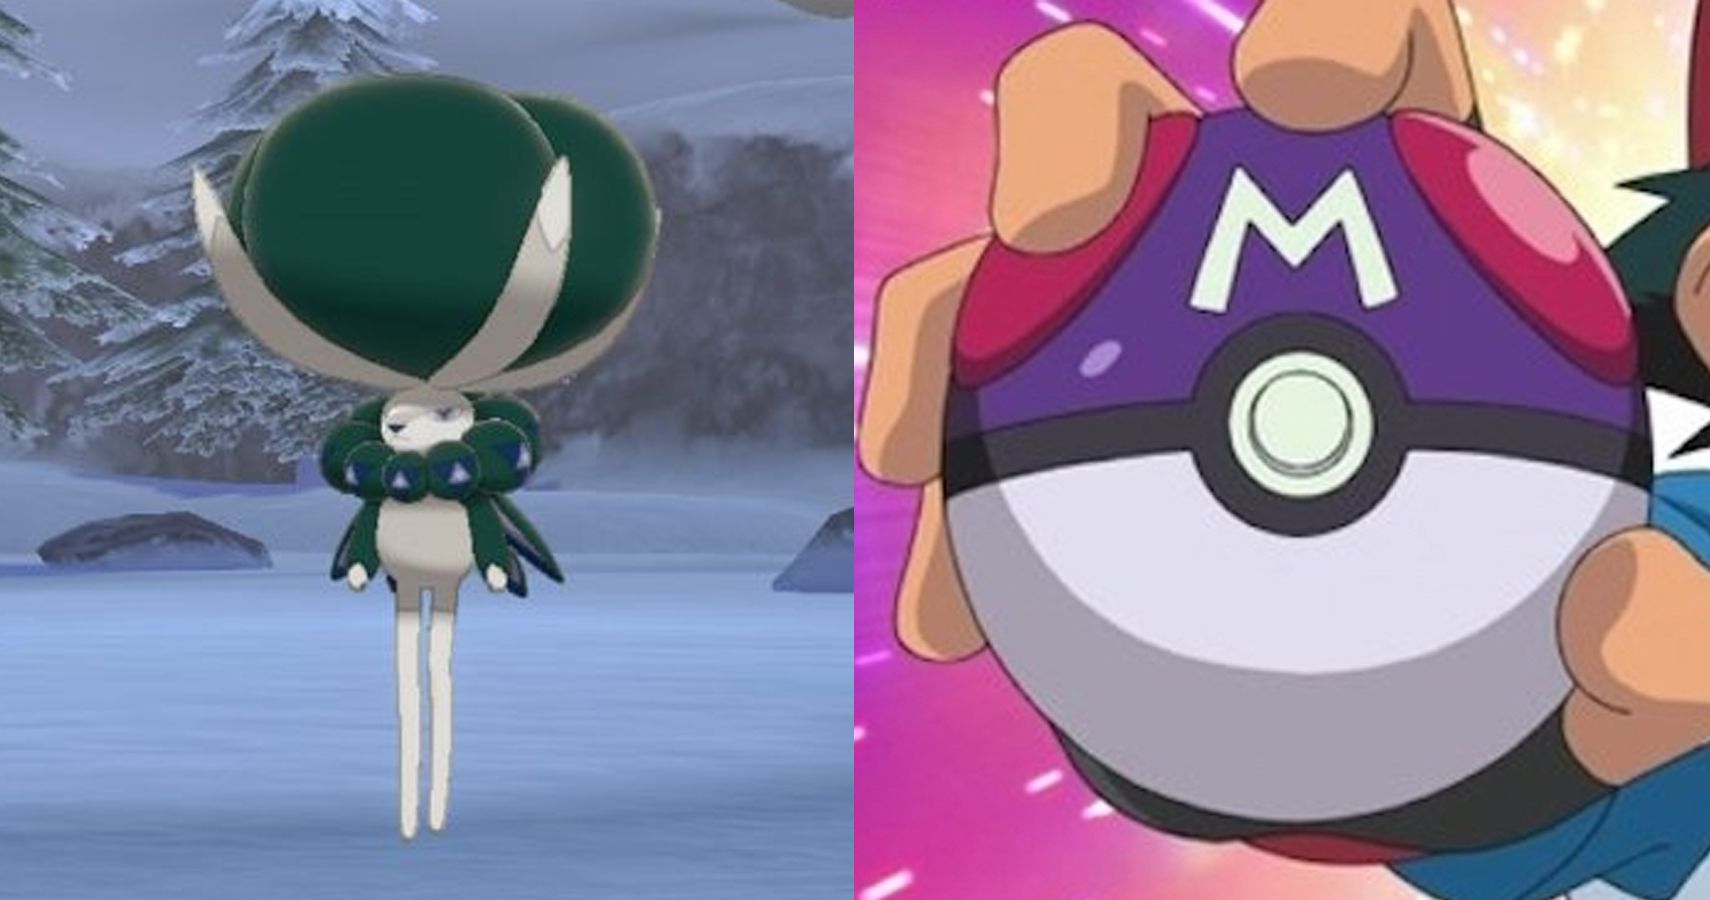 Pokémon Sword & Shield: Crown Tundra DLC - Use These Pokeballs